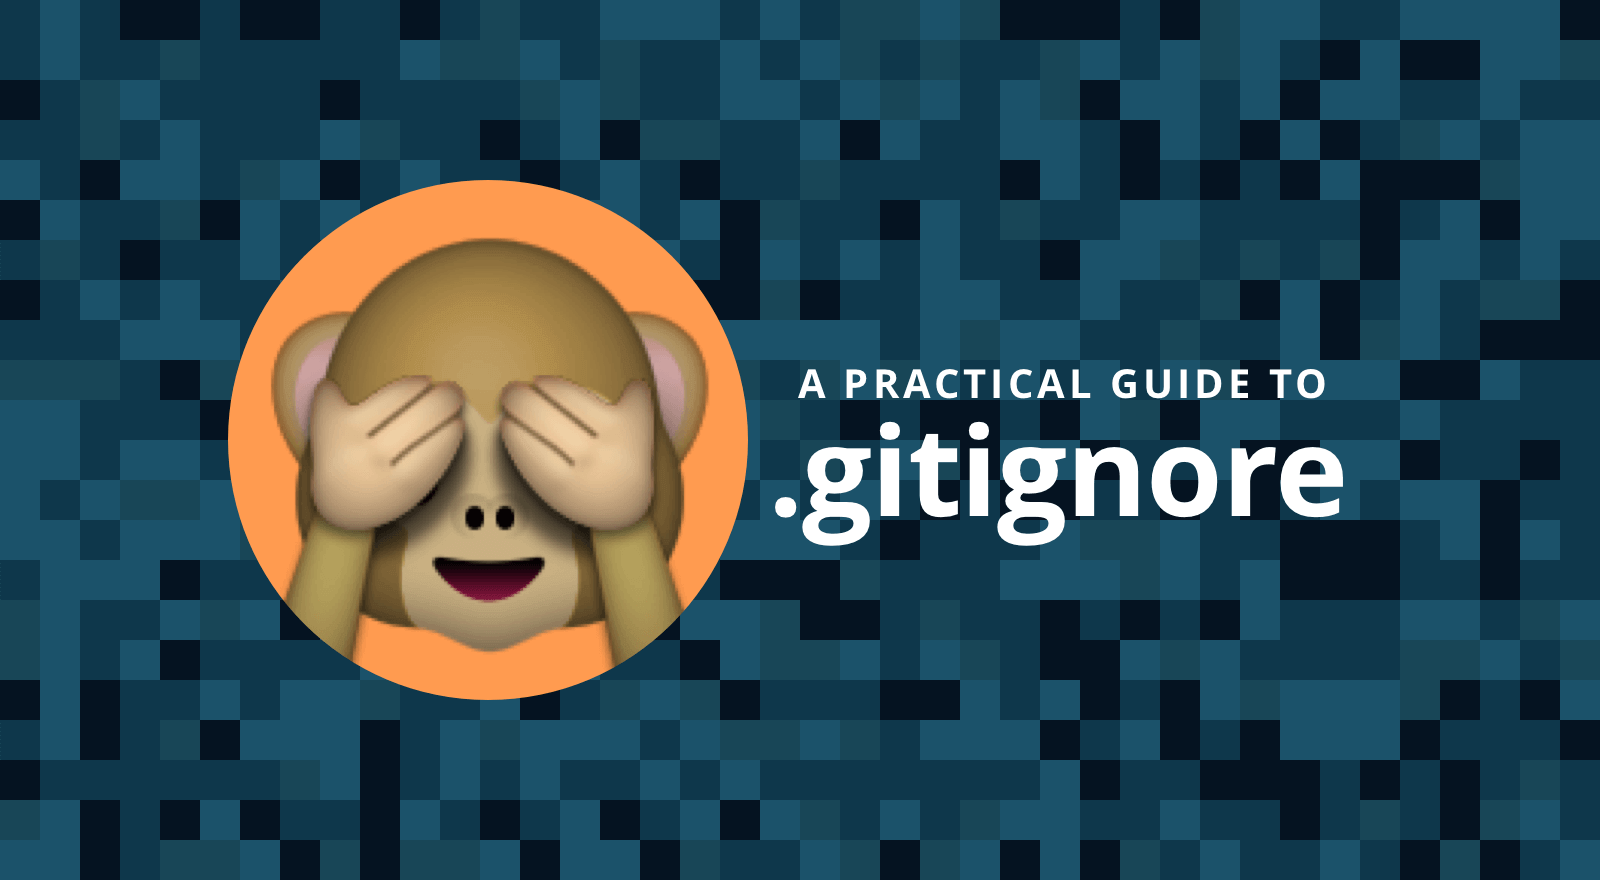 A Practical Guide to Using .gitignore